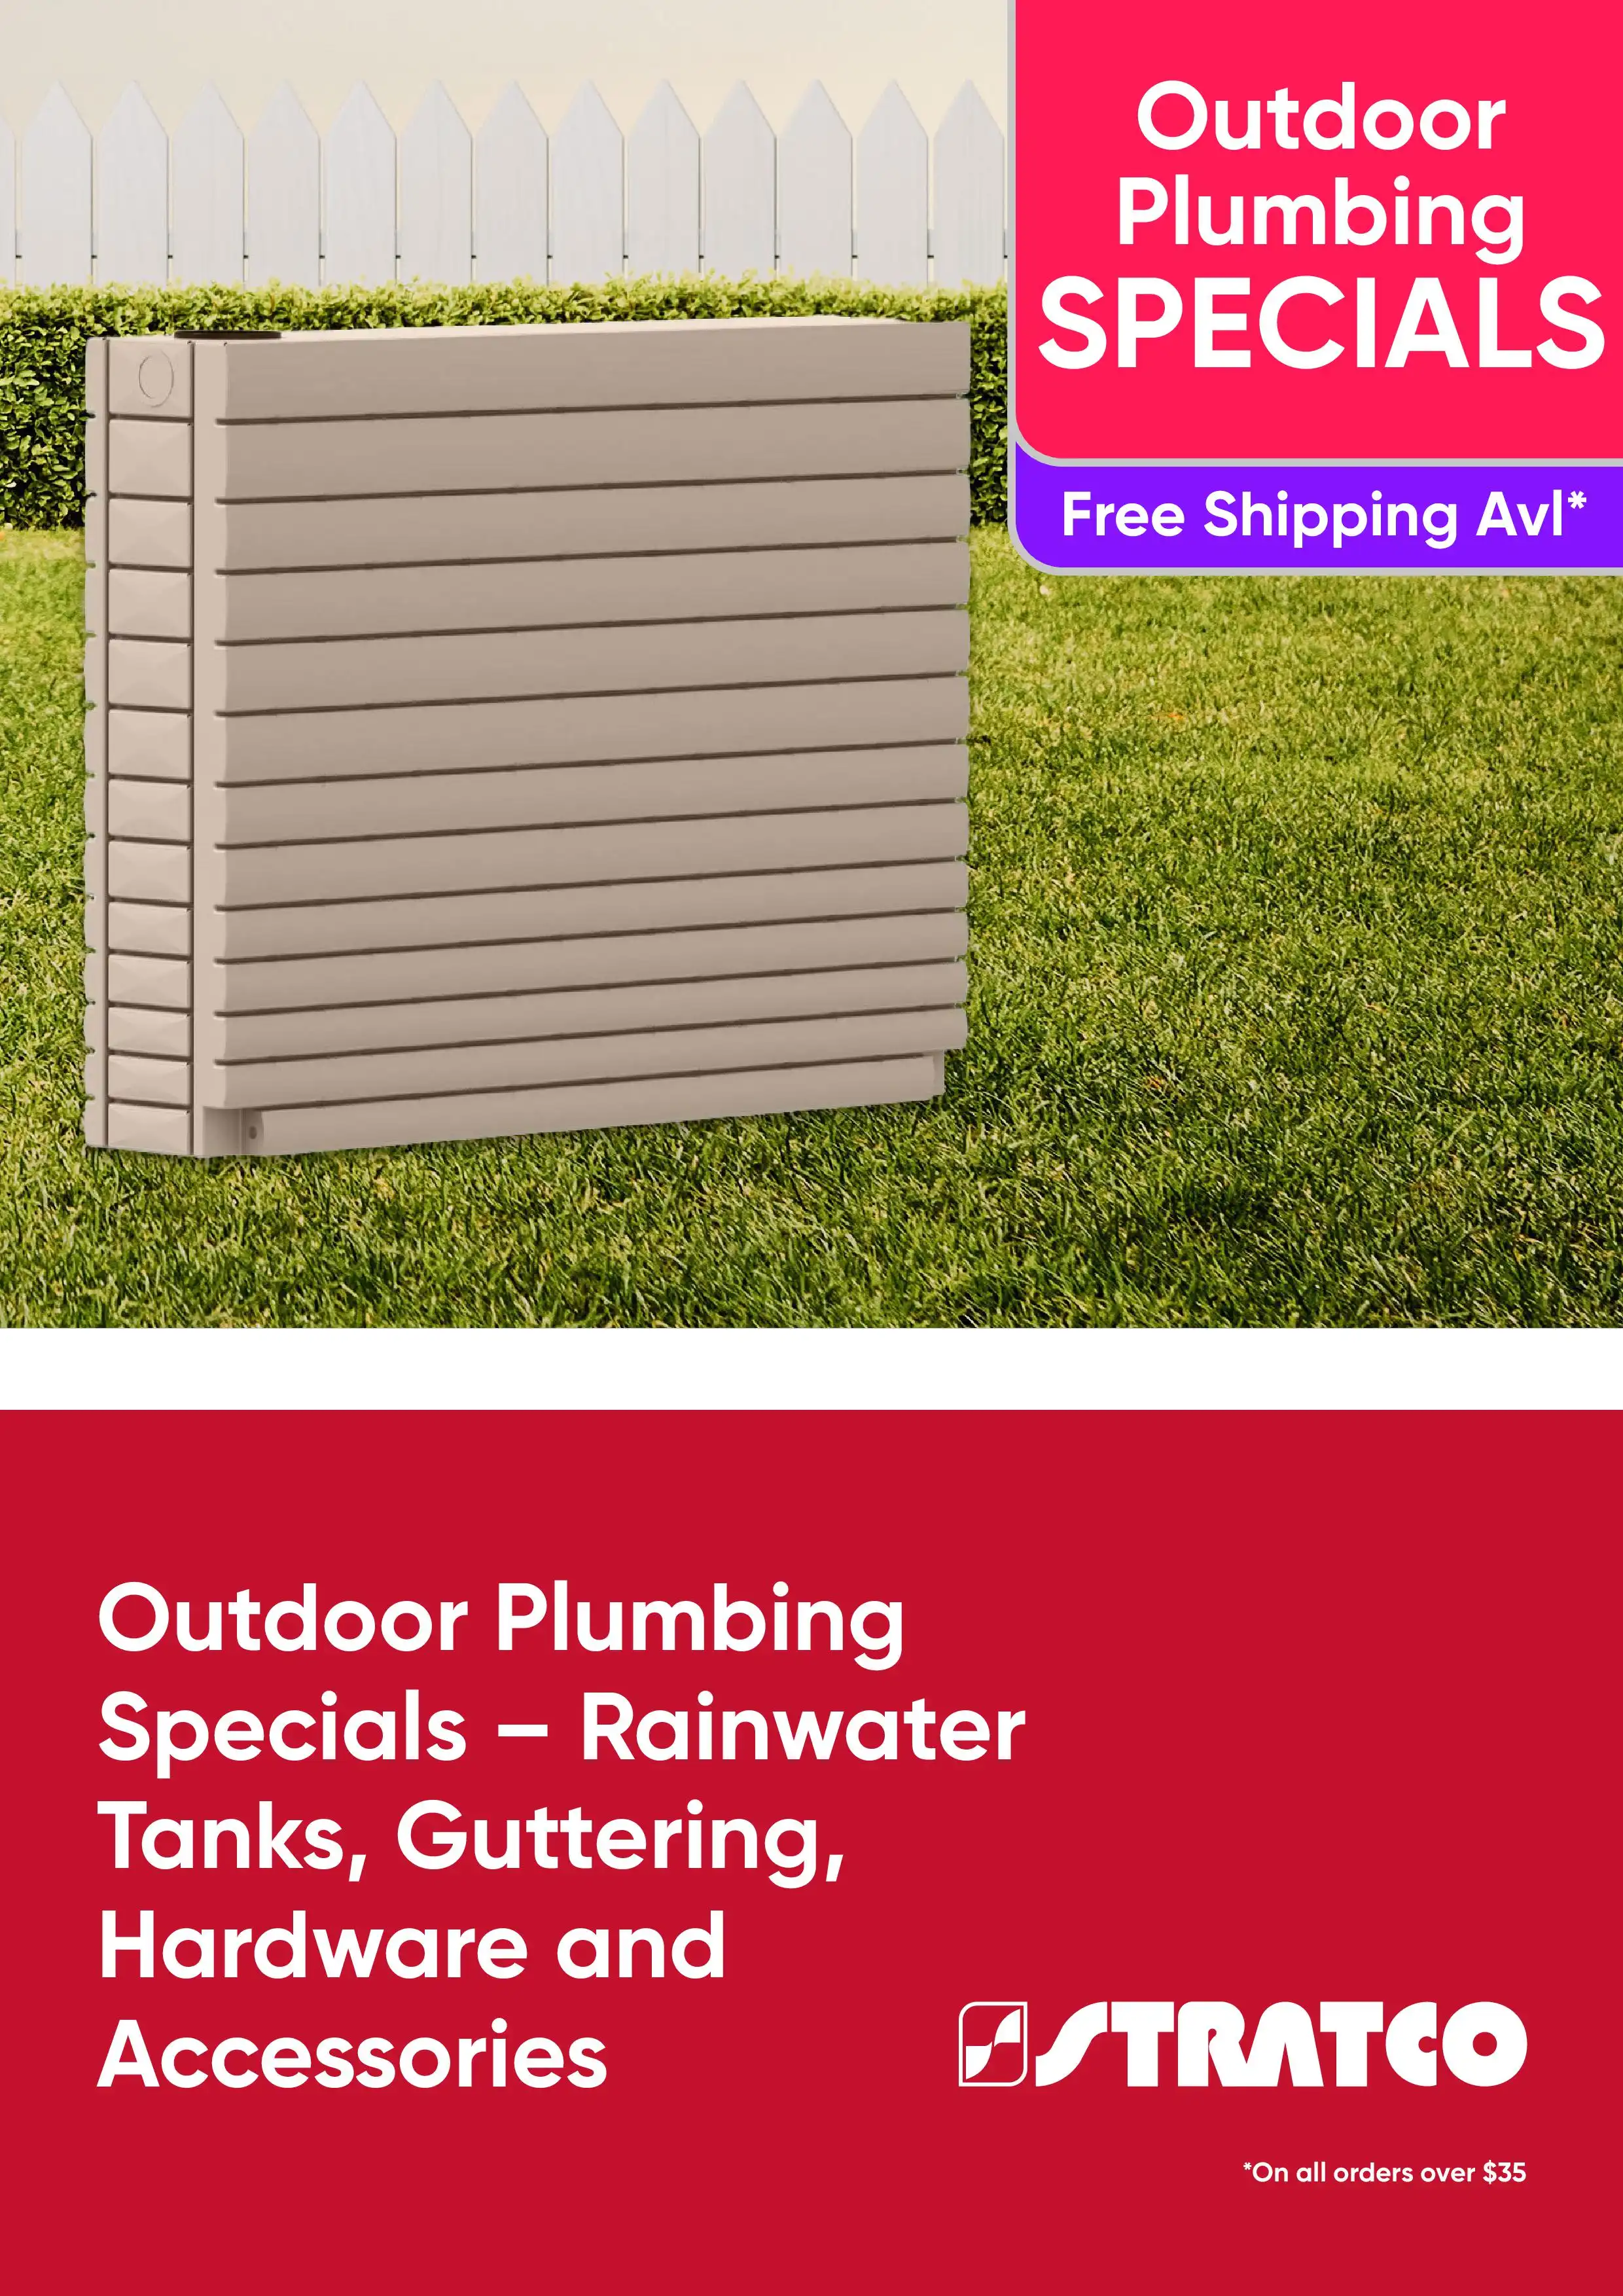 Outdoor Plumbing Specials - Rainwater Tanks, Guttering, Hardware and Accessories - NSW